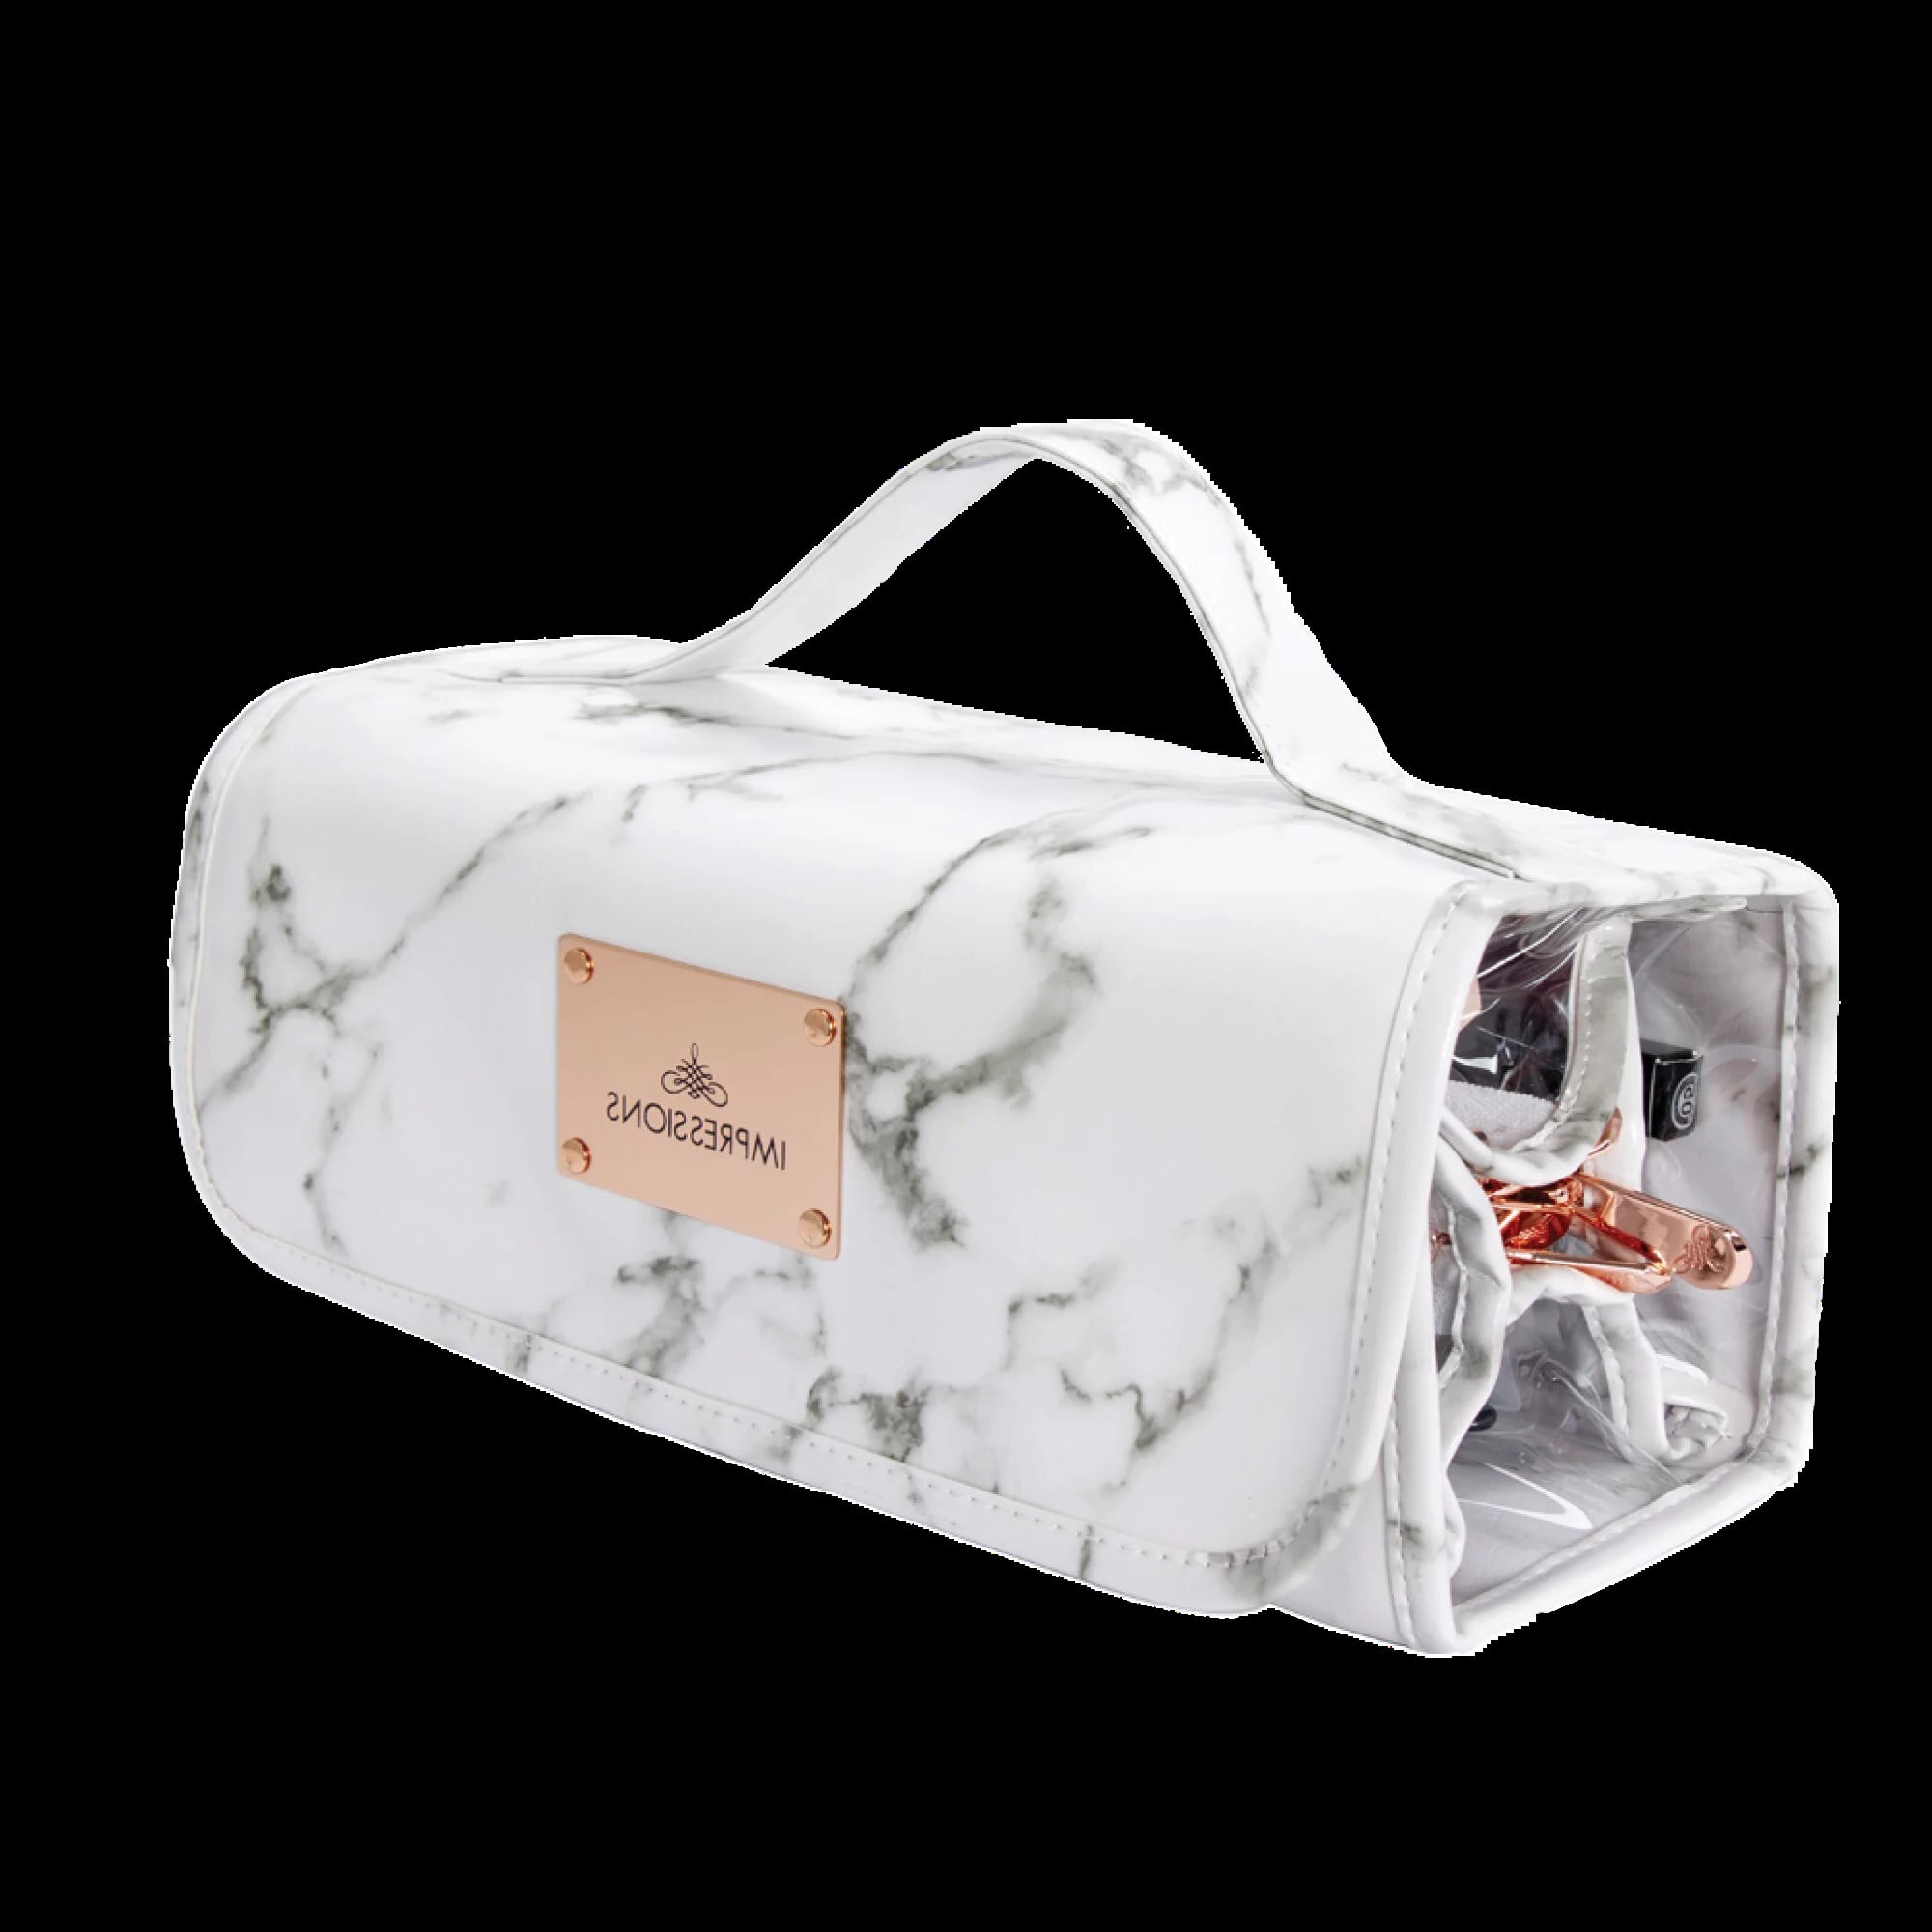 Impressions Vanity Capri Hanging Cosmetic Bag, Travel Makeup Organizer  (White) 